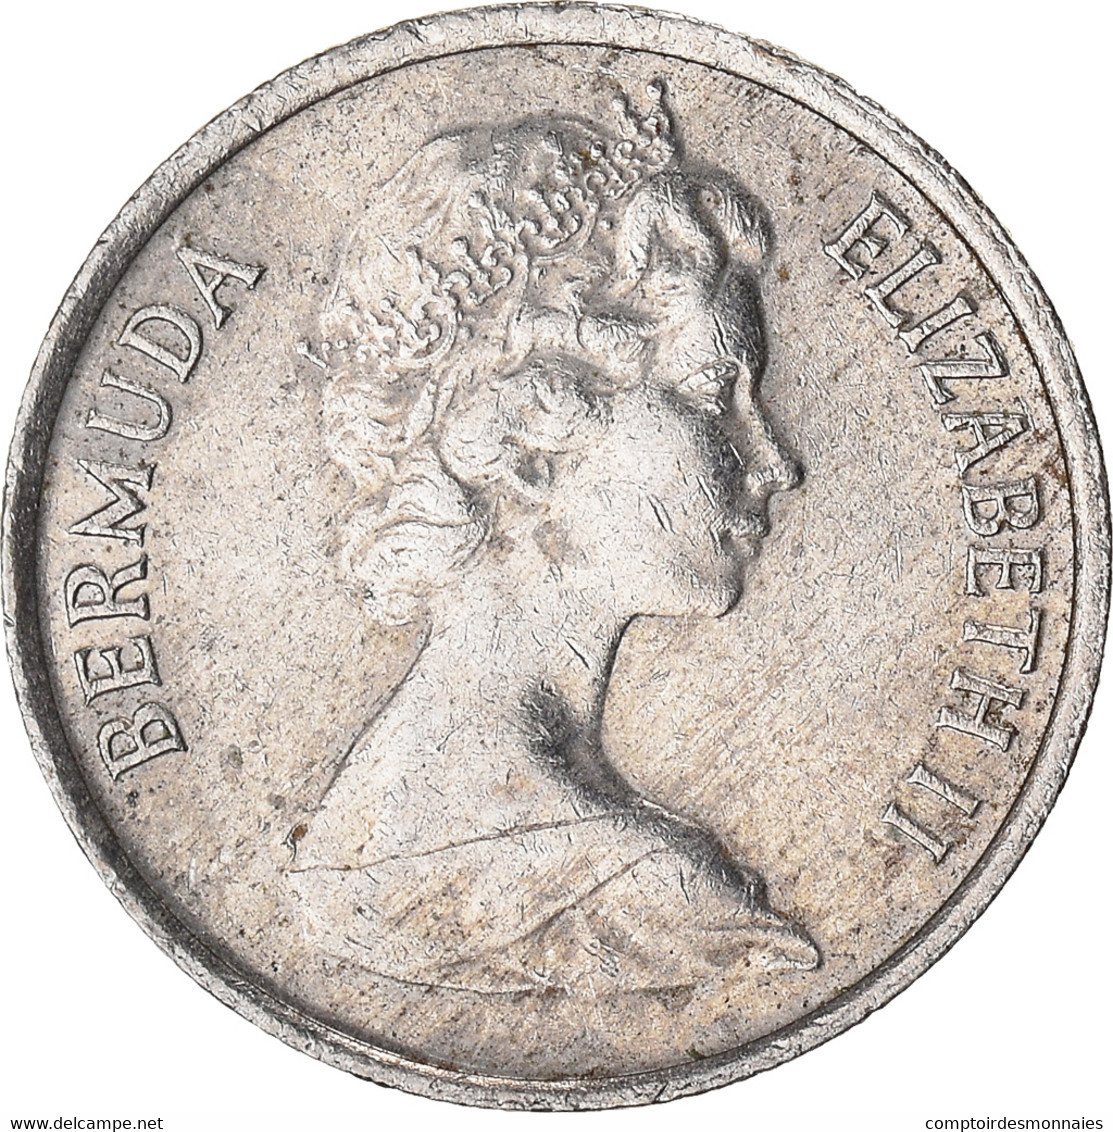 Monnaie, Bermudes, 10 Cents, 1981 - Bermuda